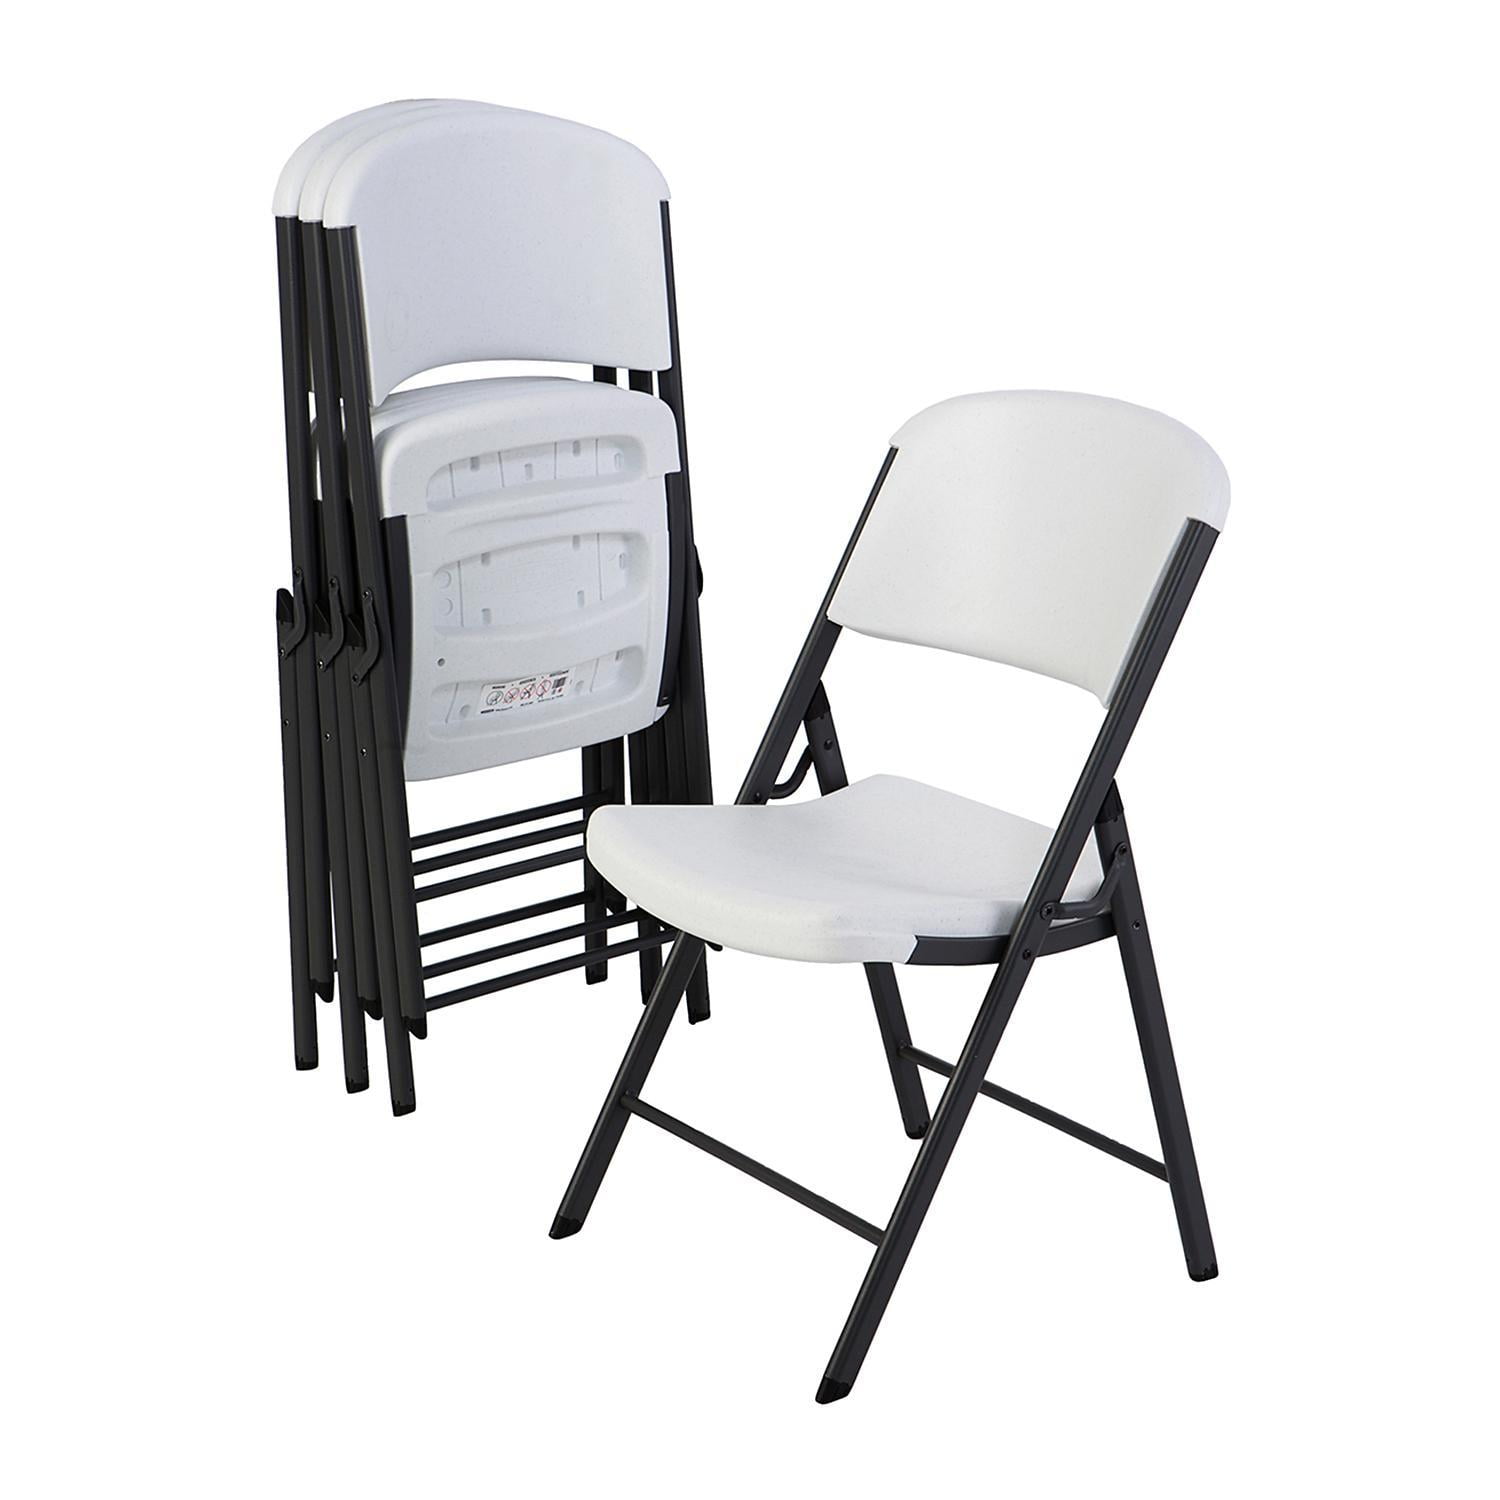 Lifetime Commercial Grade Contoured Folding Chair 4 Pack Pick a Color,CYBER SALE 